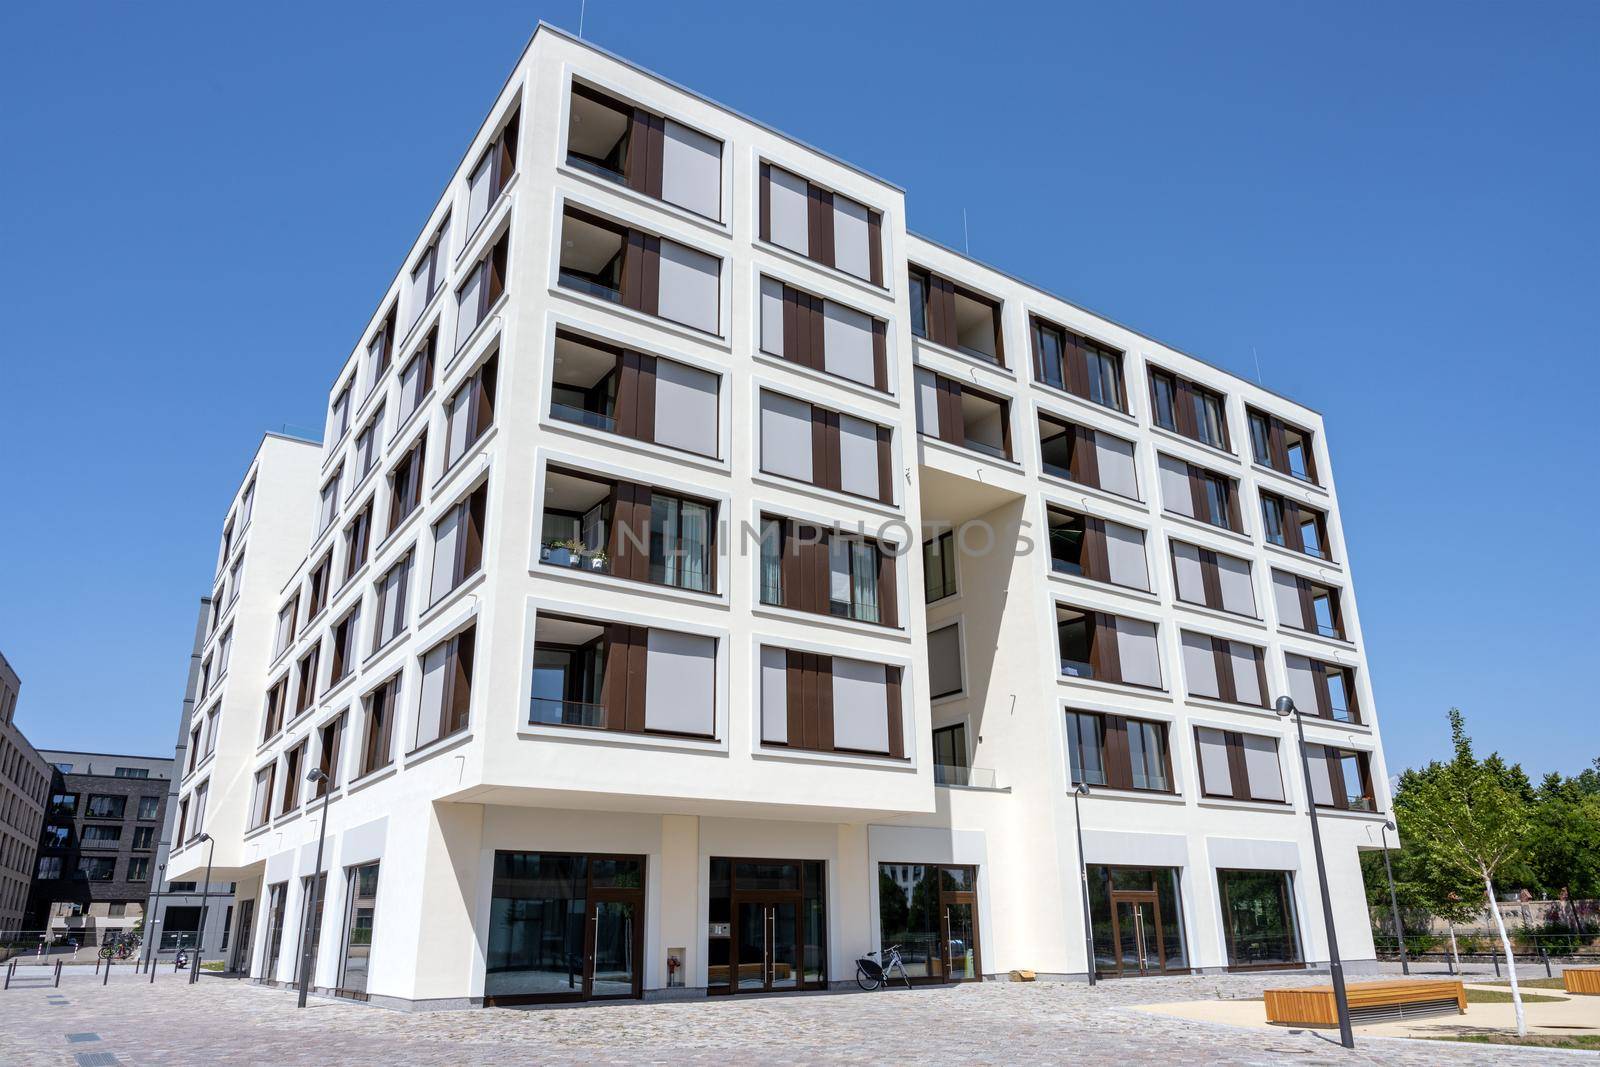 Modern luxury multi-family apartment building by elxeneize